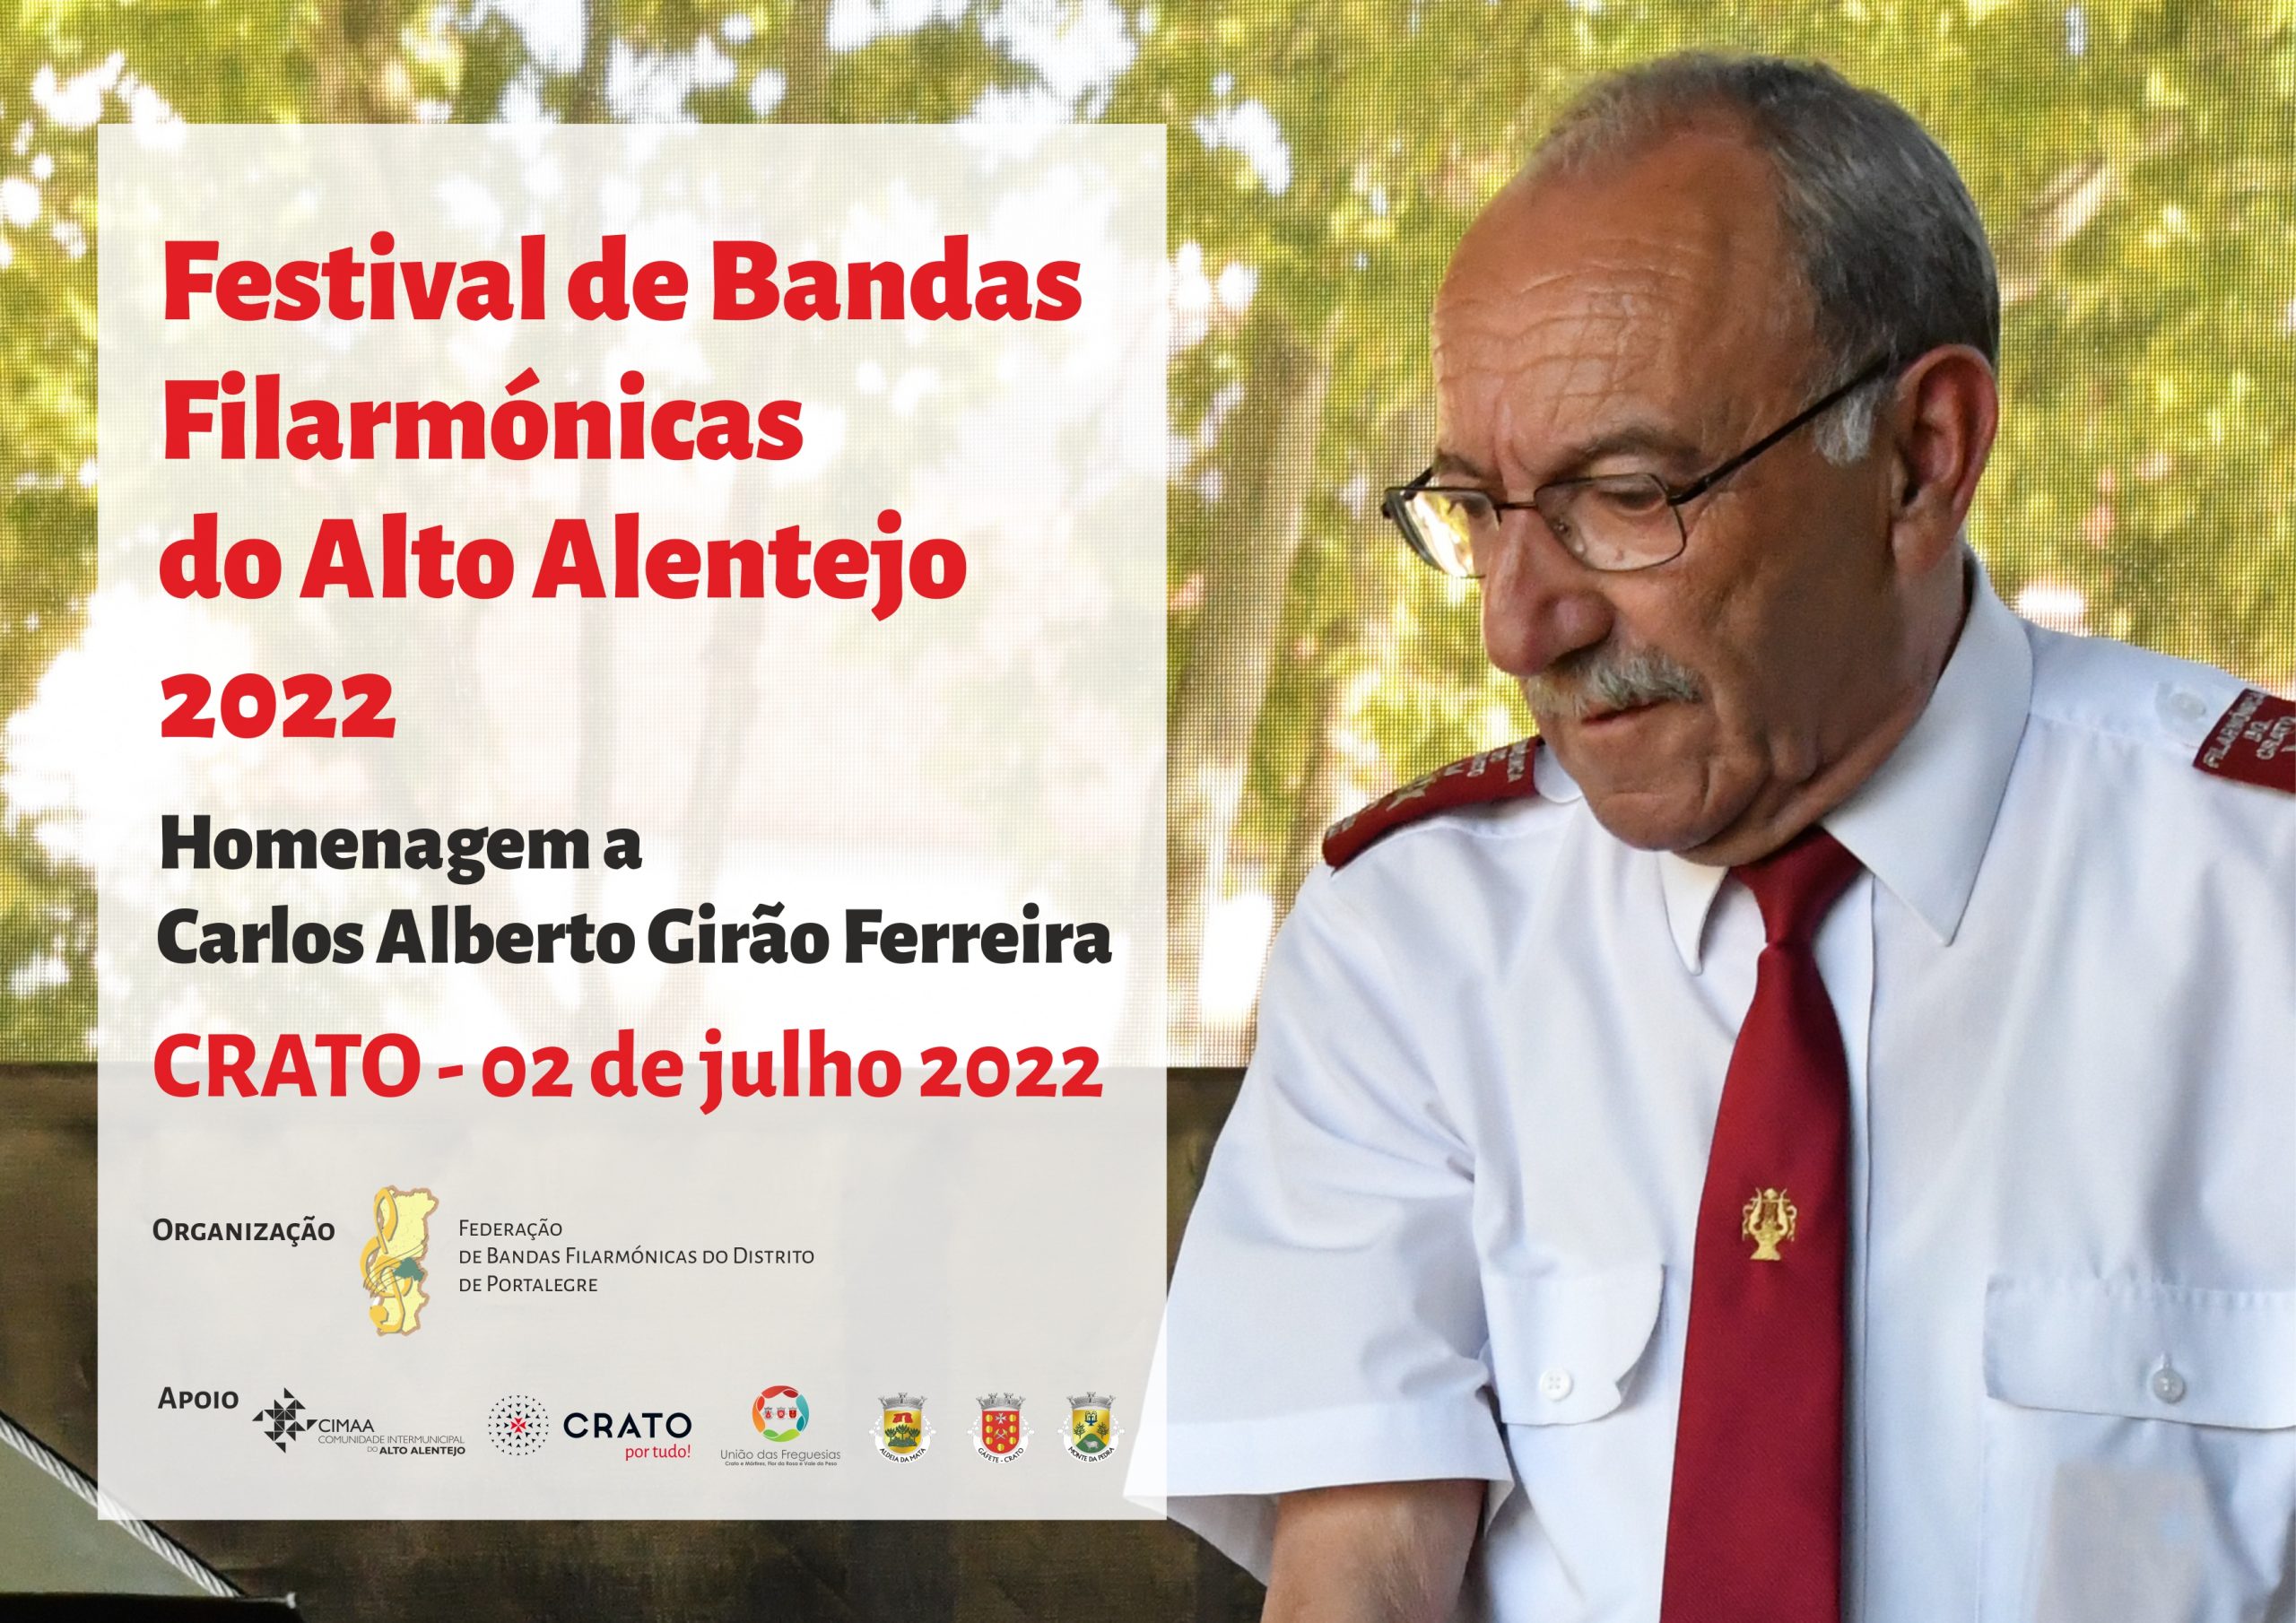 Festival de Bandas Filarmónicas do Alto Alentejo